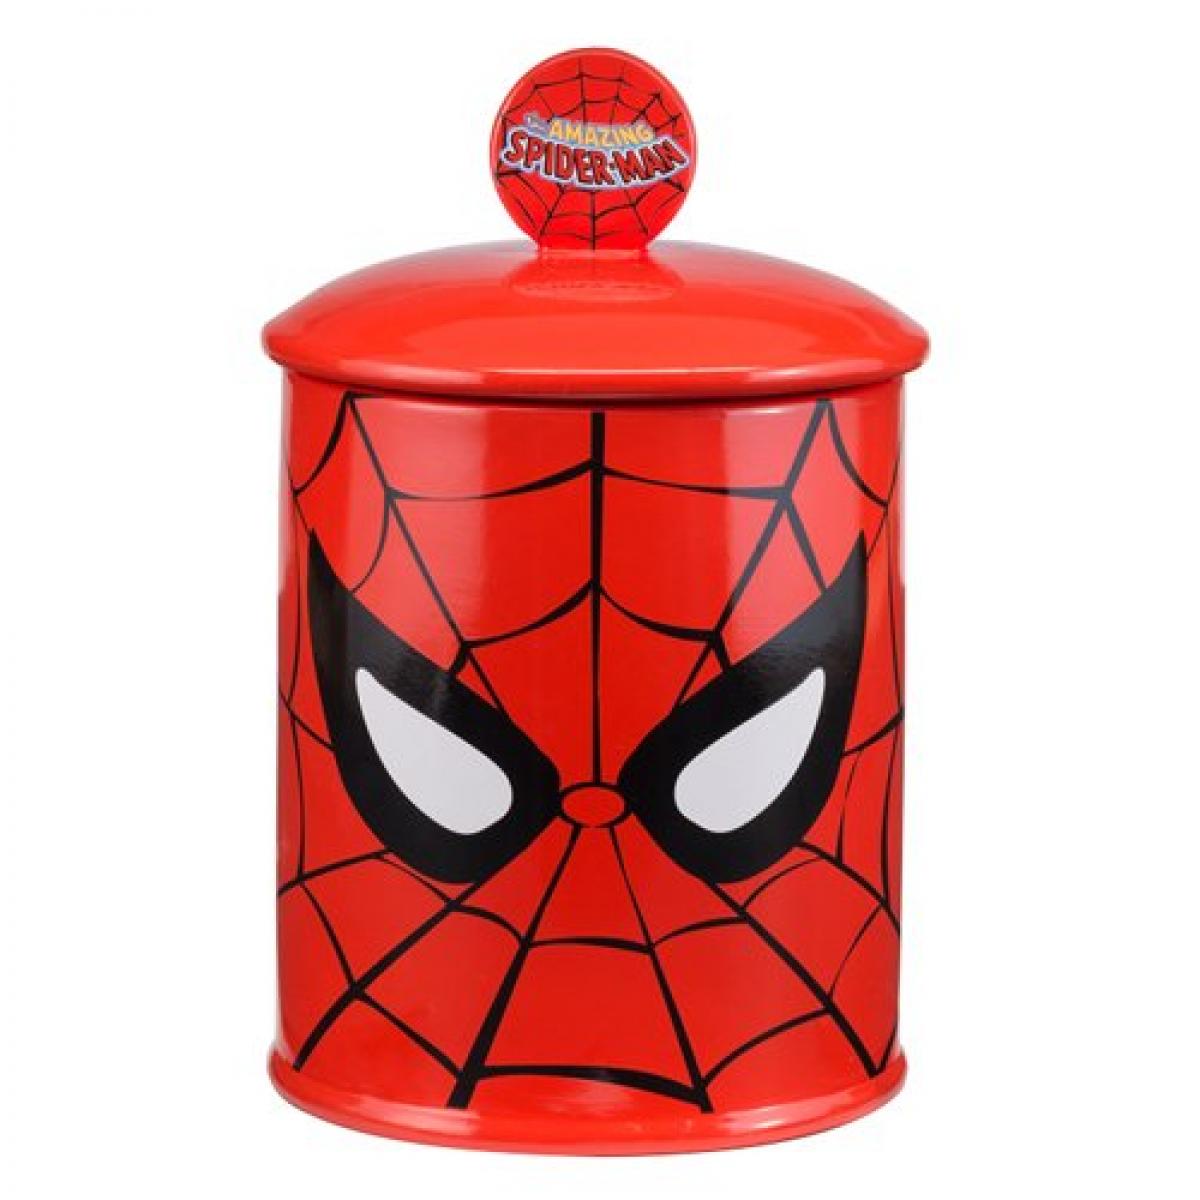 Spider-Man Ceramic Cookie Jar